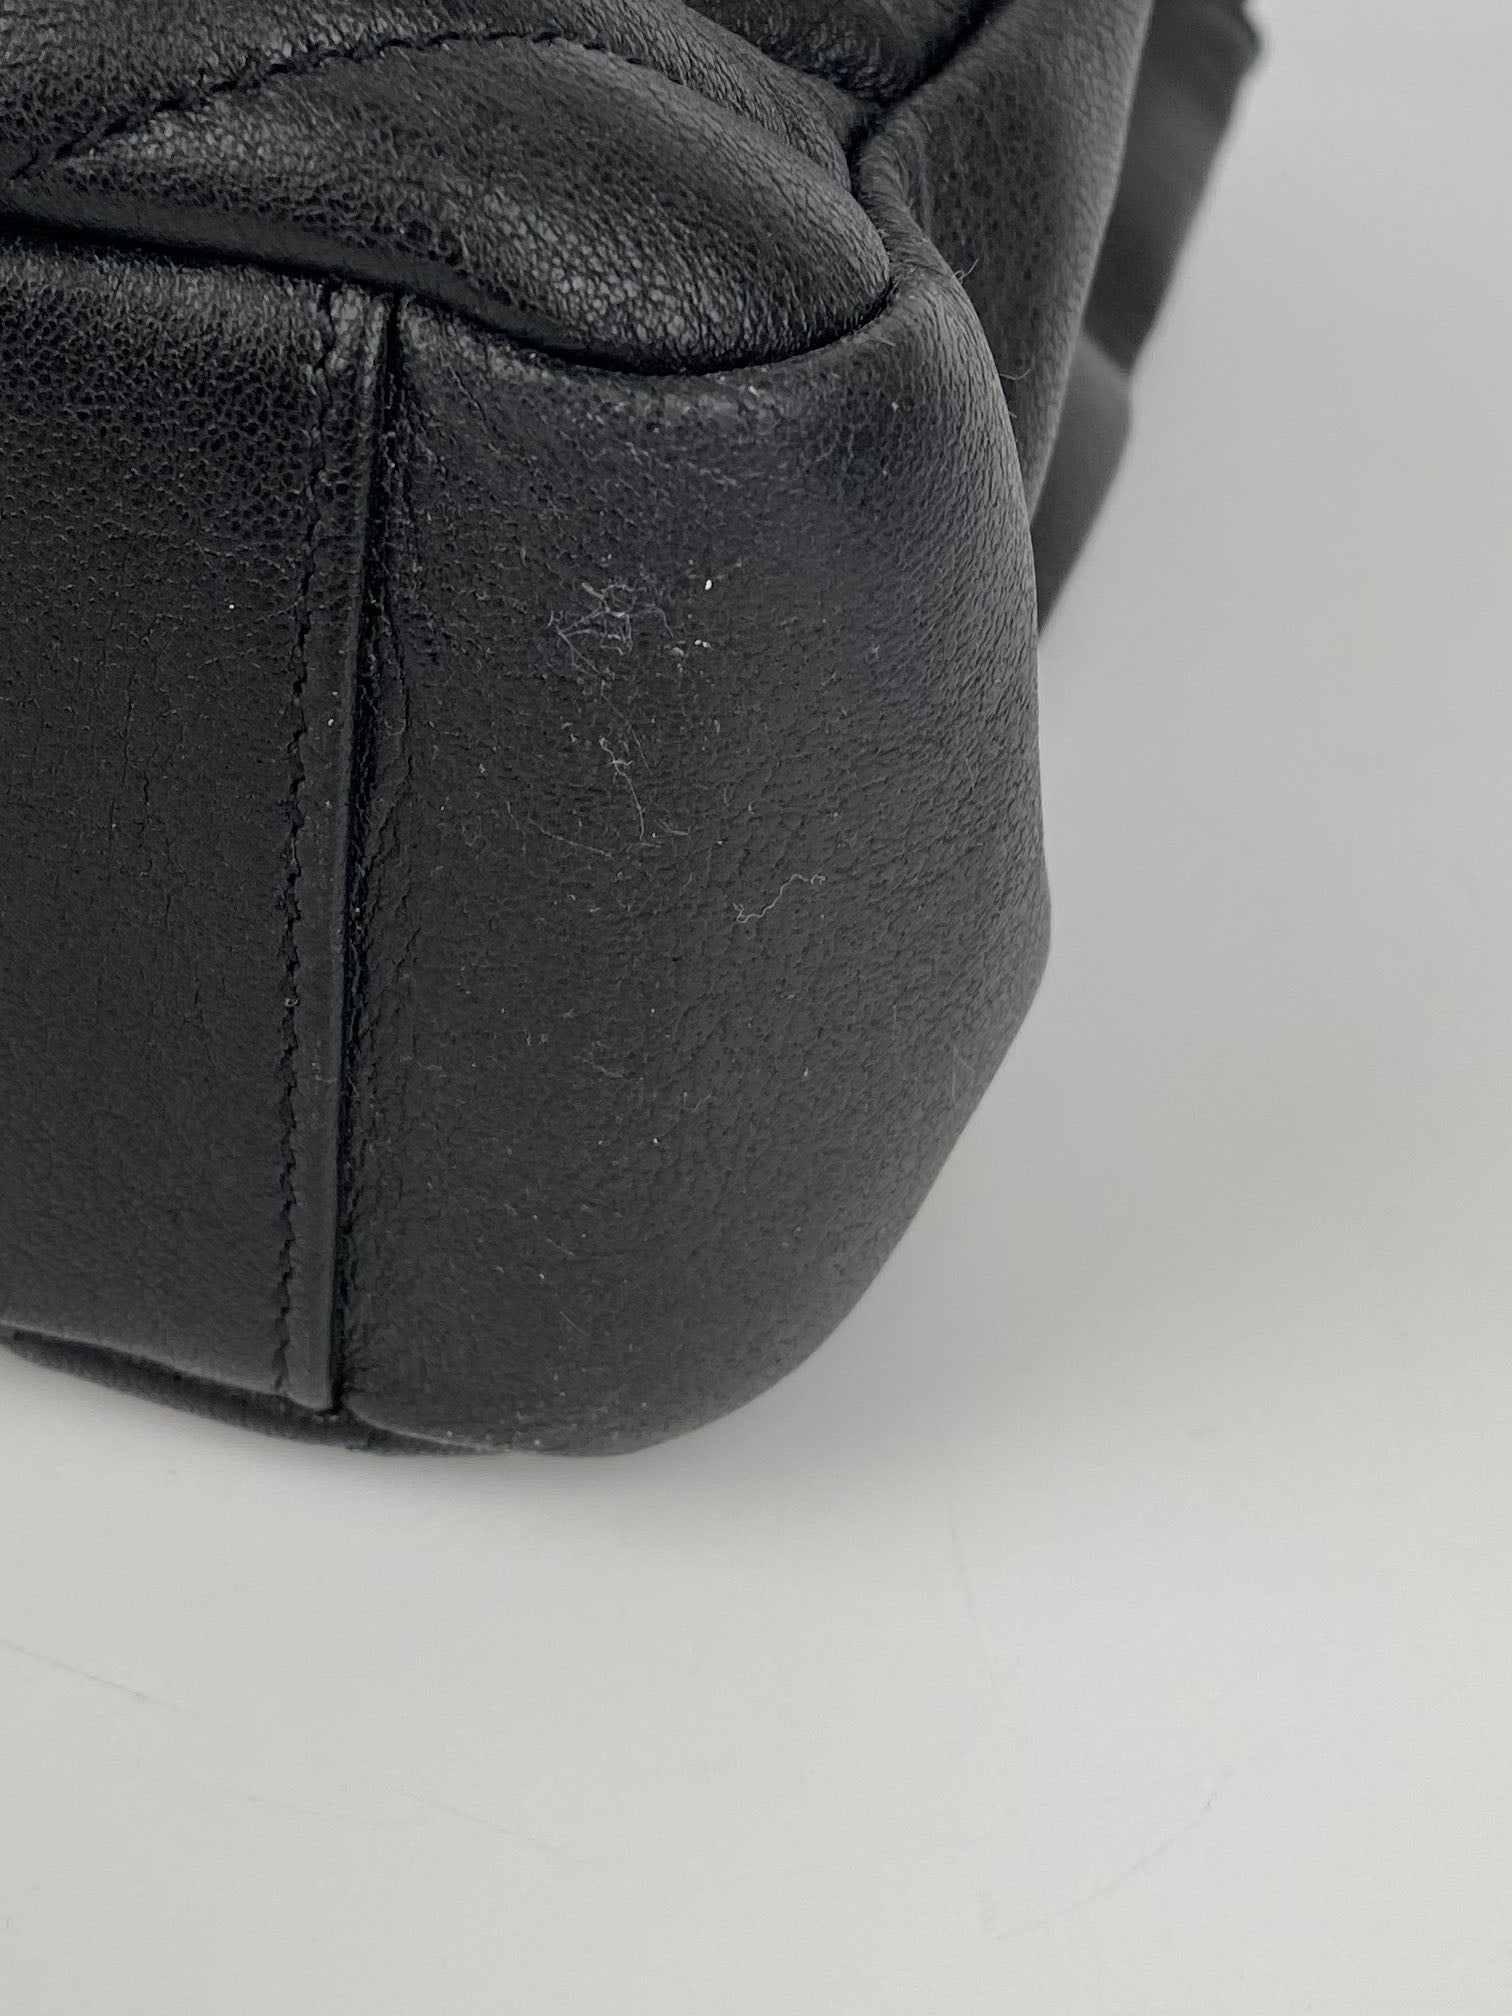 Saint Laurent Large Black Quilted Leather College Bag